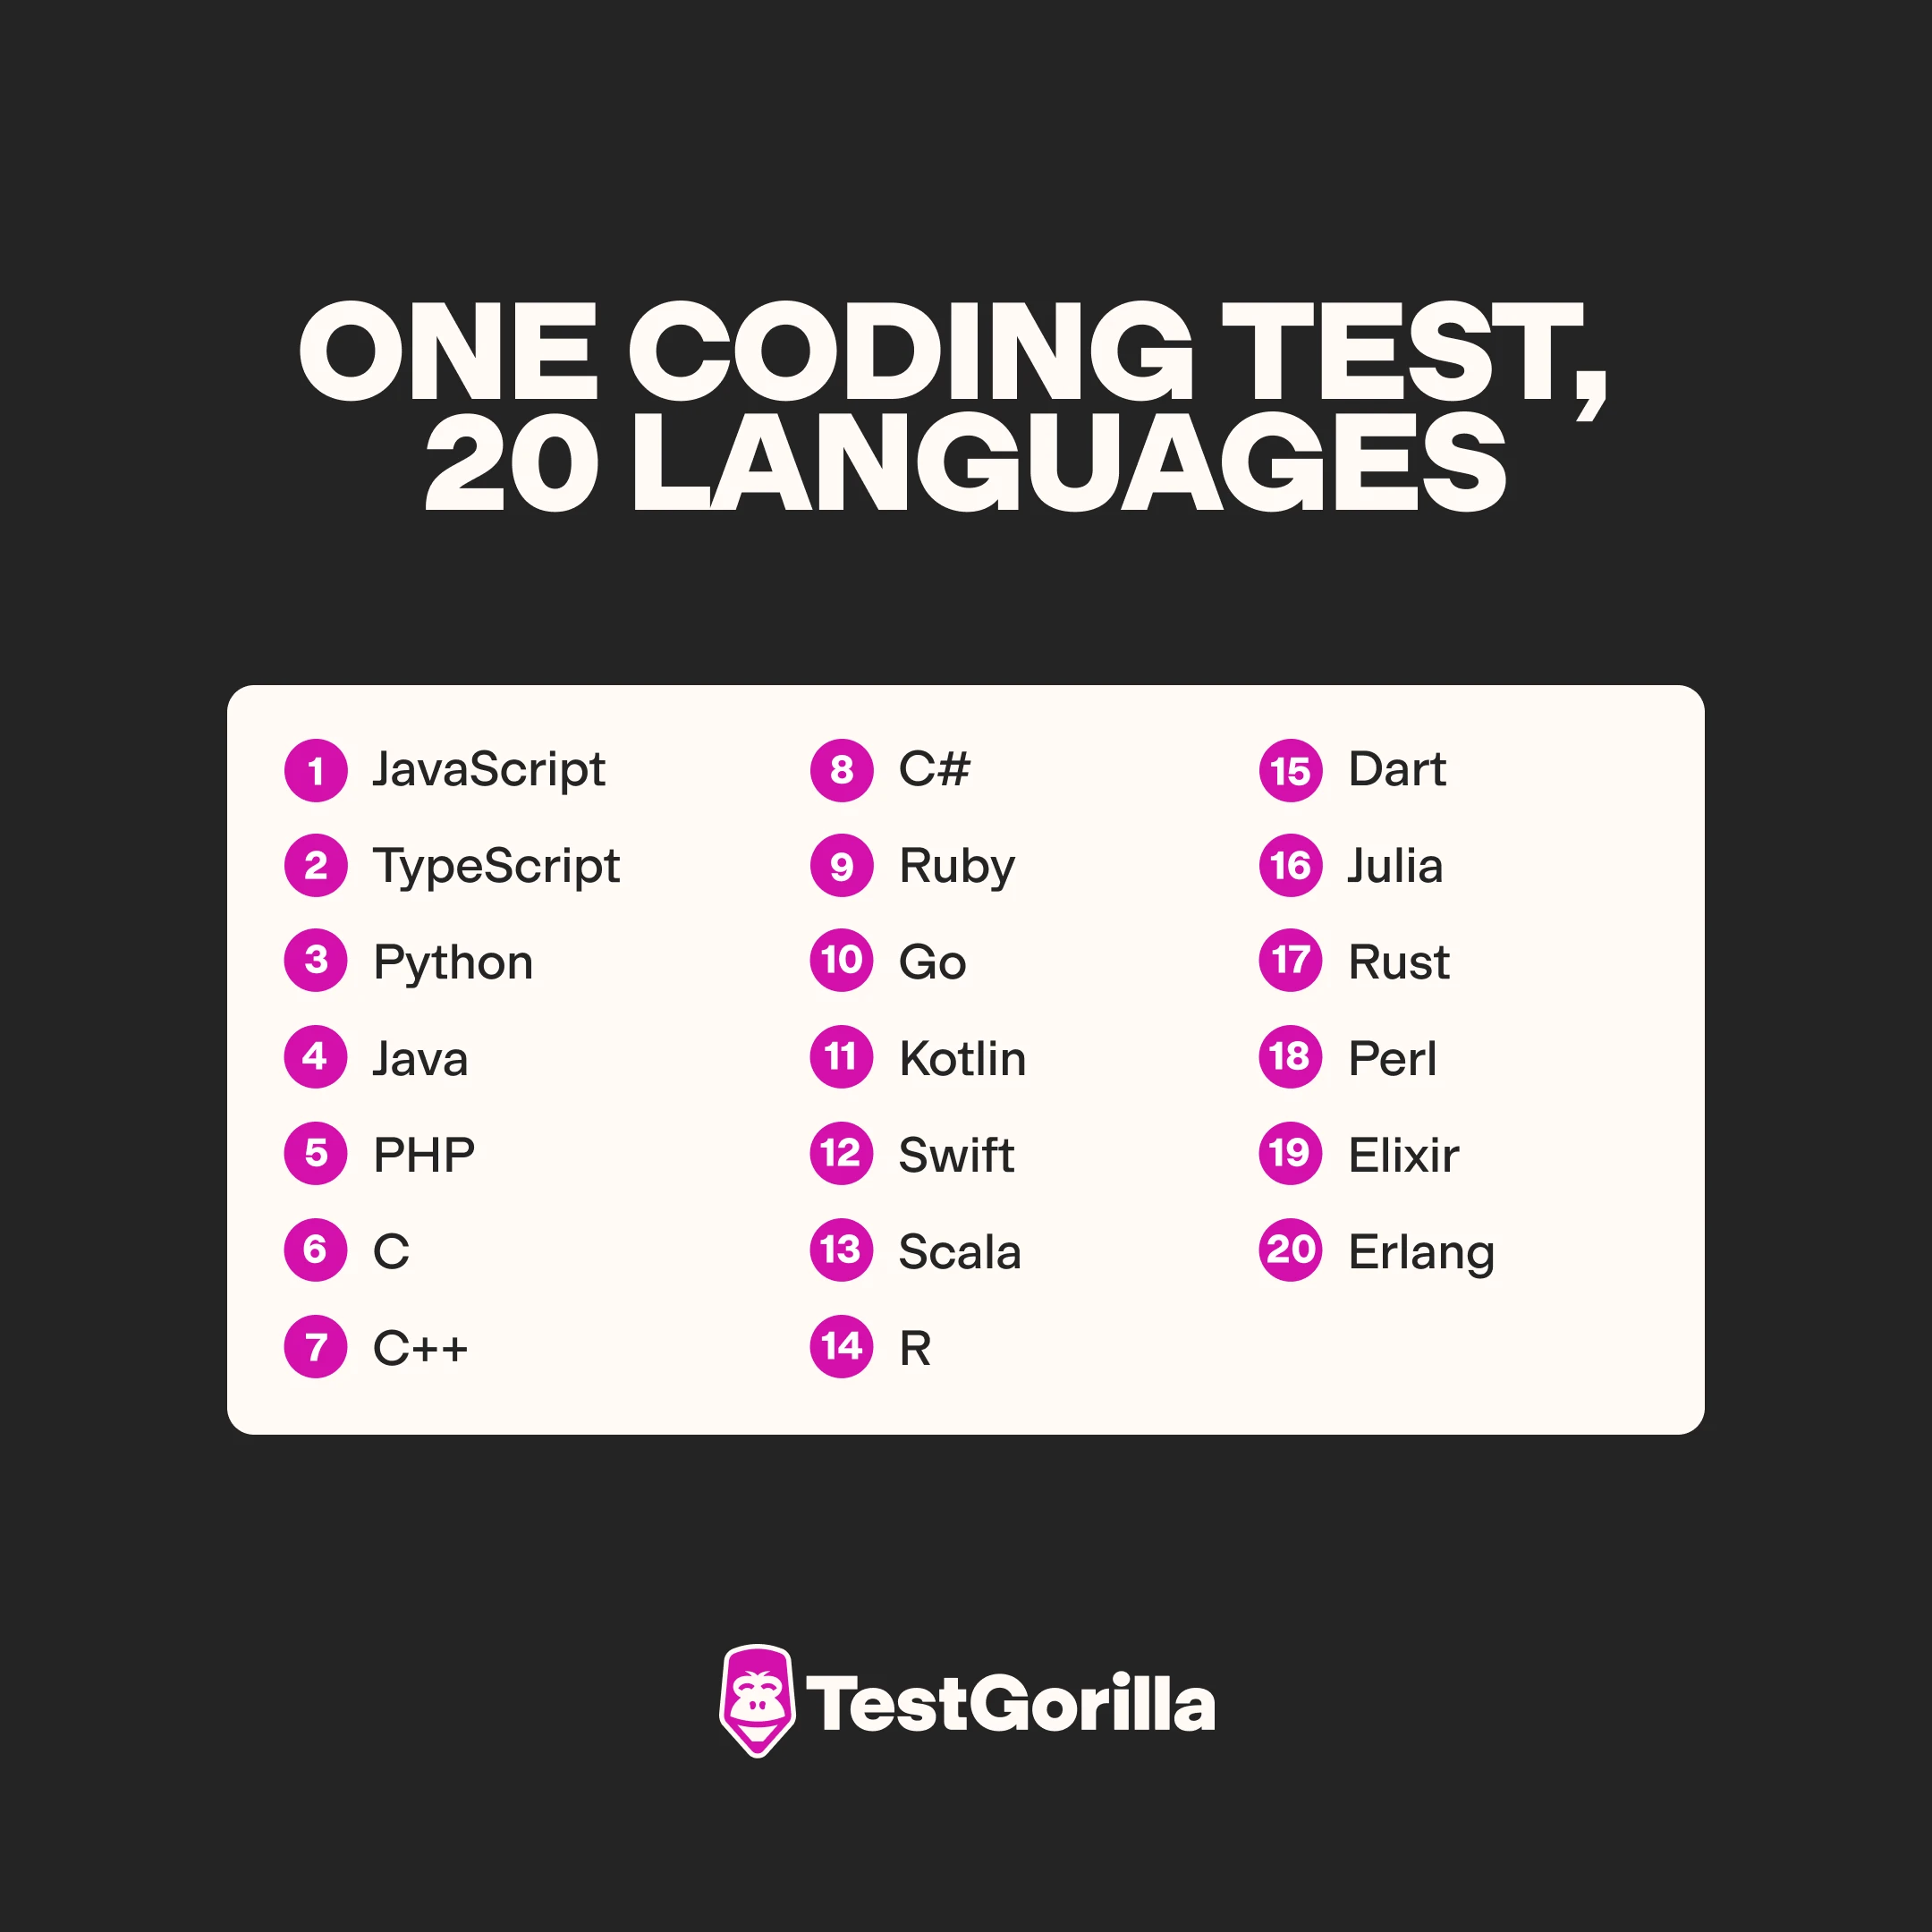 Our language agnostic coding tests support 20 languages